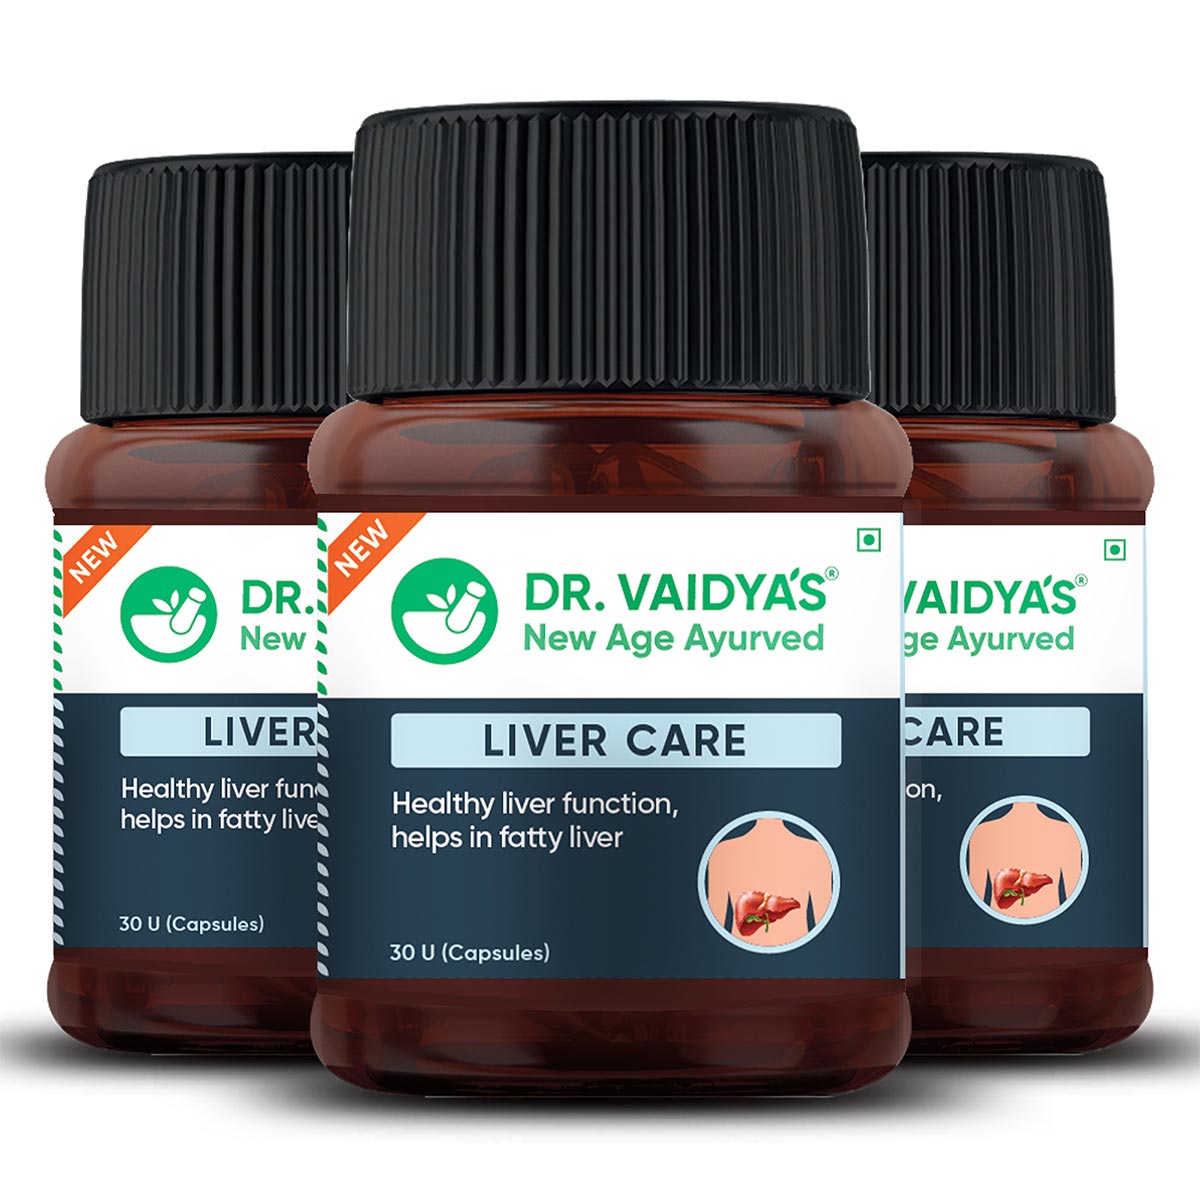 Liver Care: Helps In Fatty Liver & Daily Liver Detox